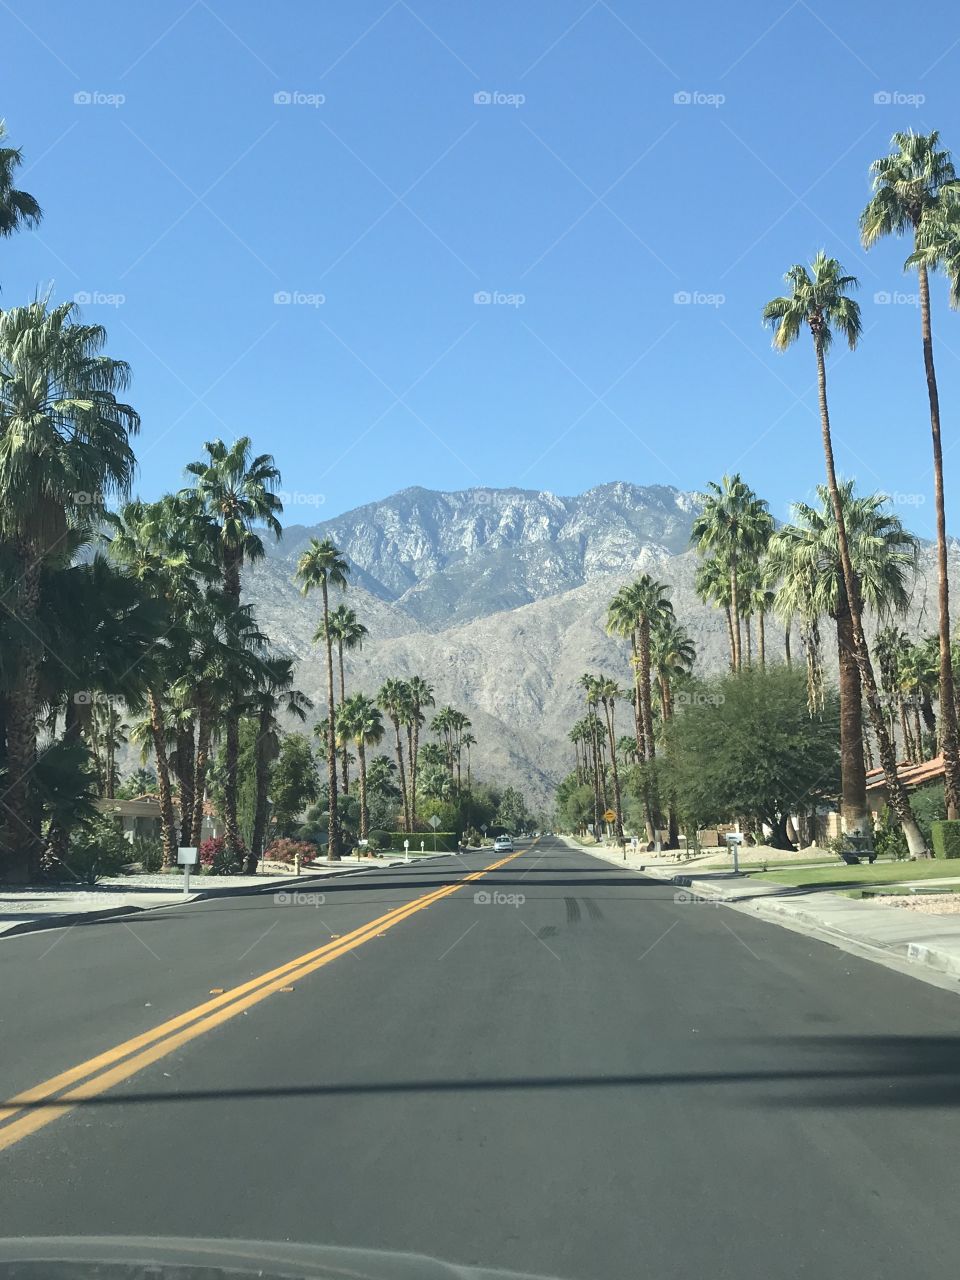 Palm Springs, ca